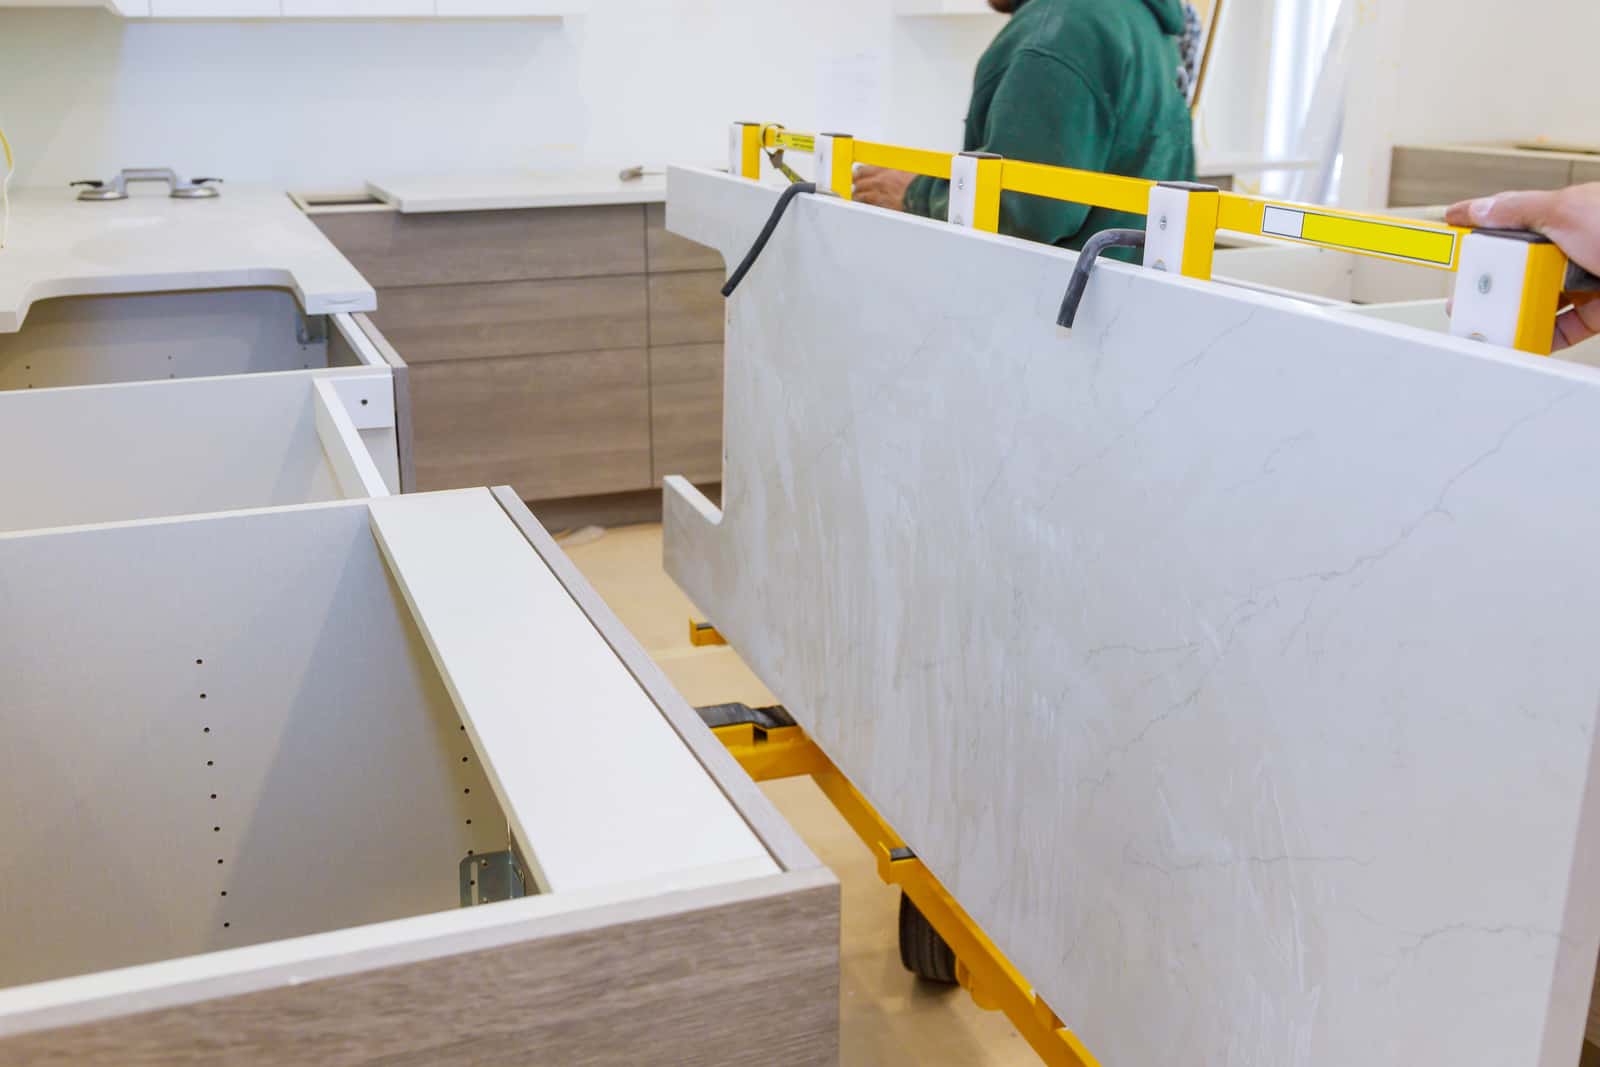 Granite countertops being installed in kitchen